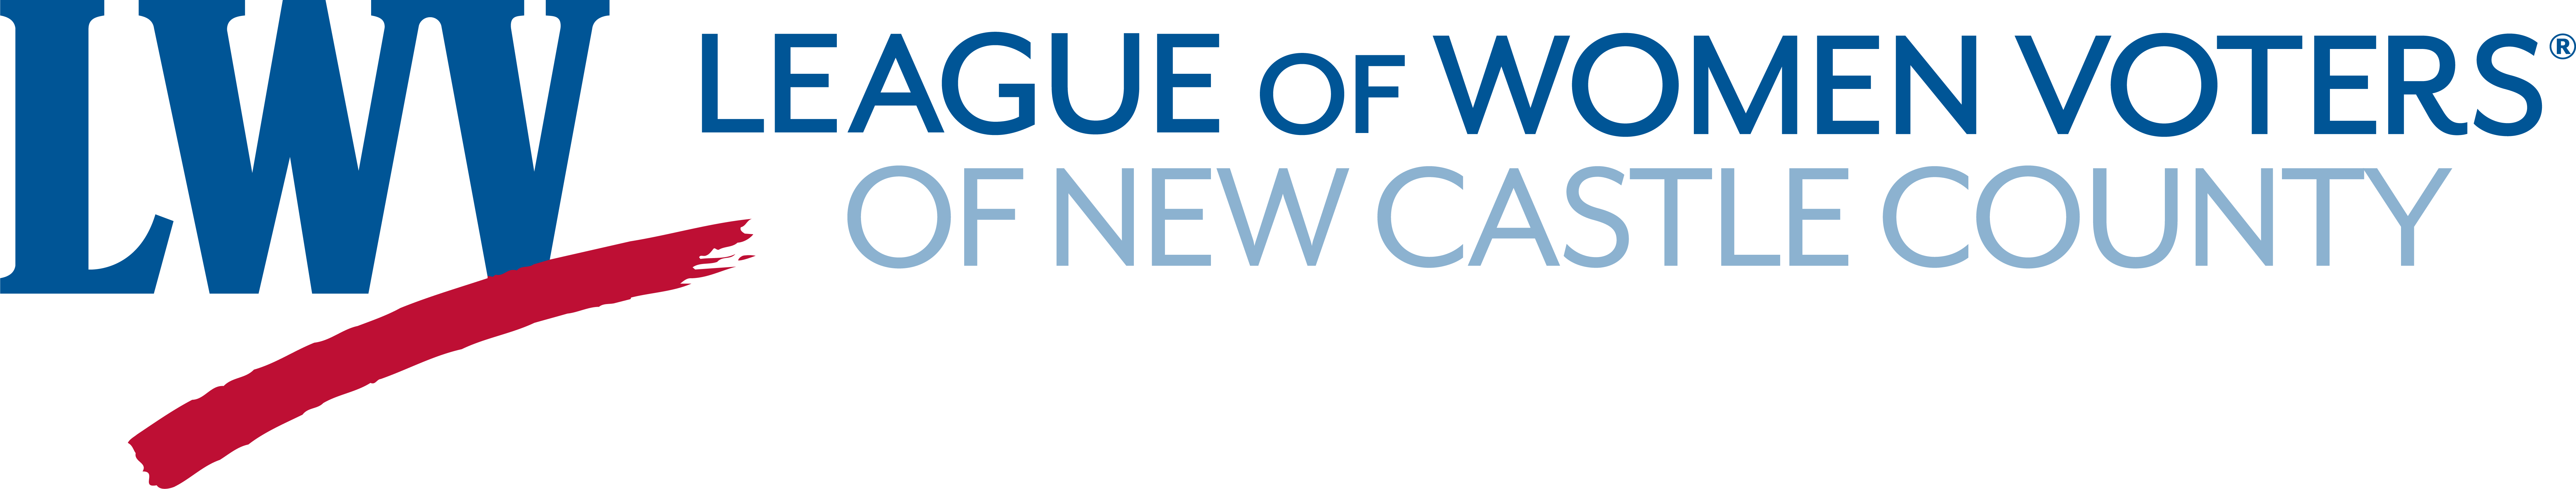 LWV - League of Women Voters of New Castle County